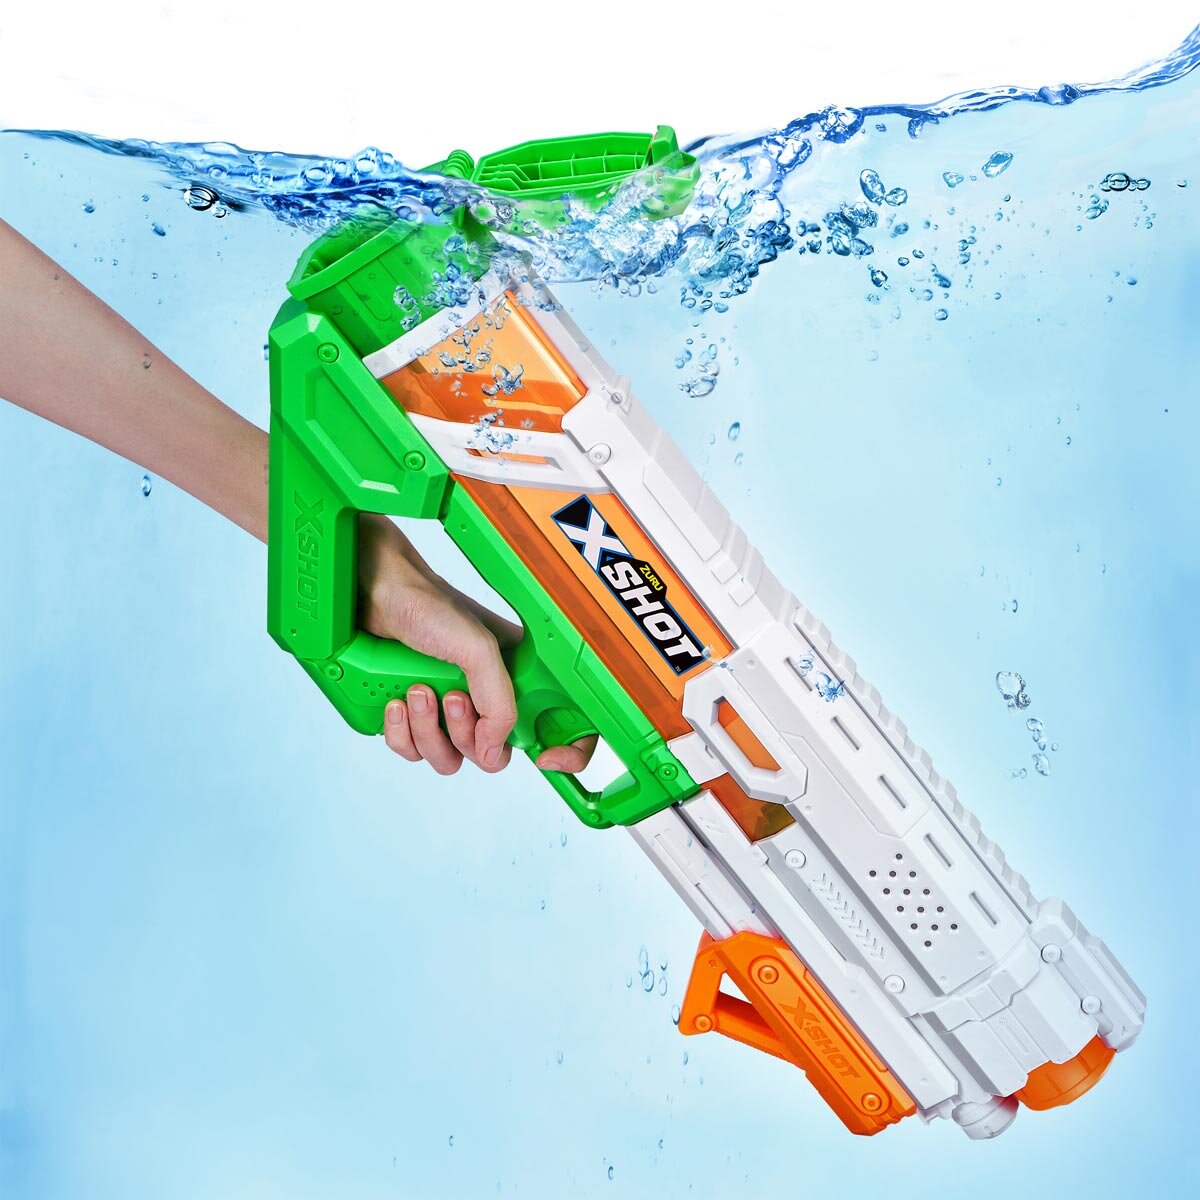 Buy Zuru X-Shot Water Blaster 2 Pack Feature1 Image at Costco.co.uk